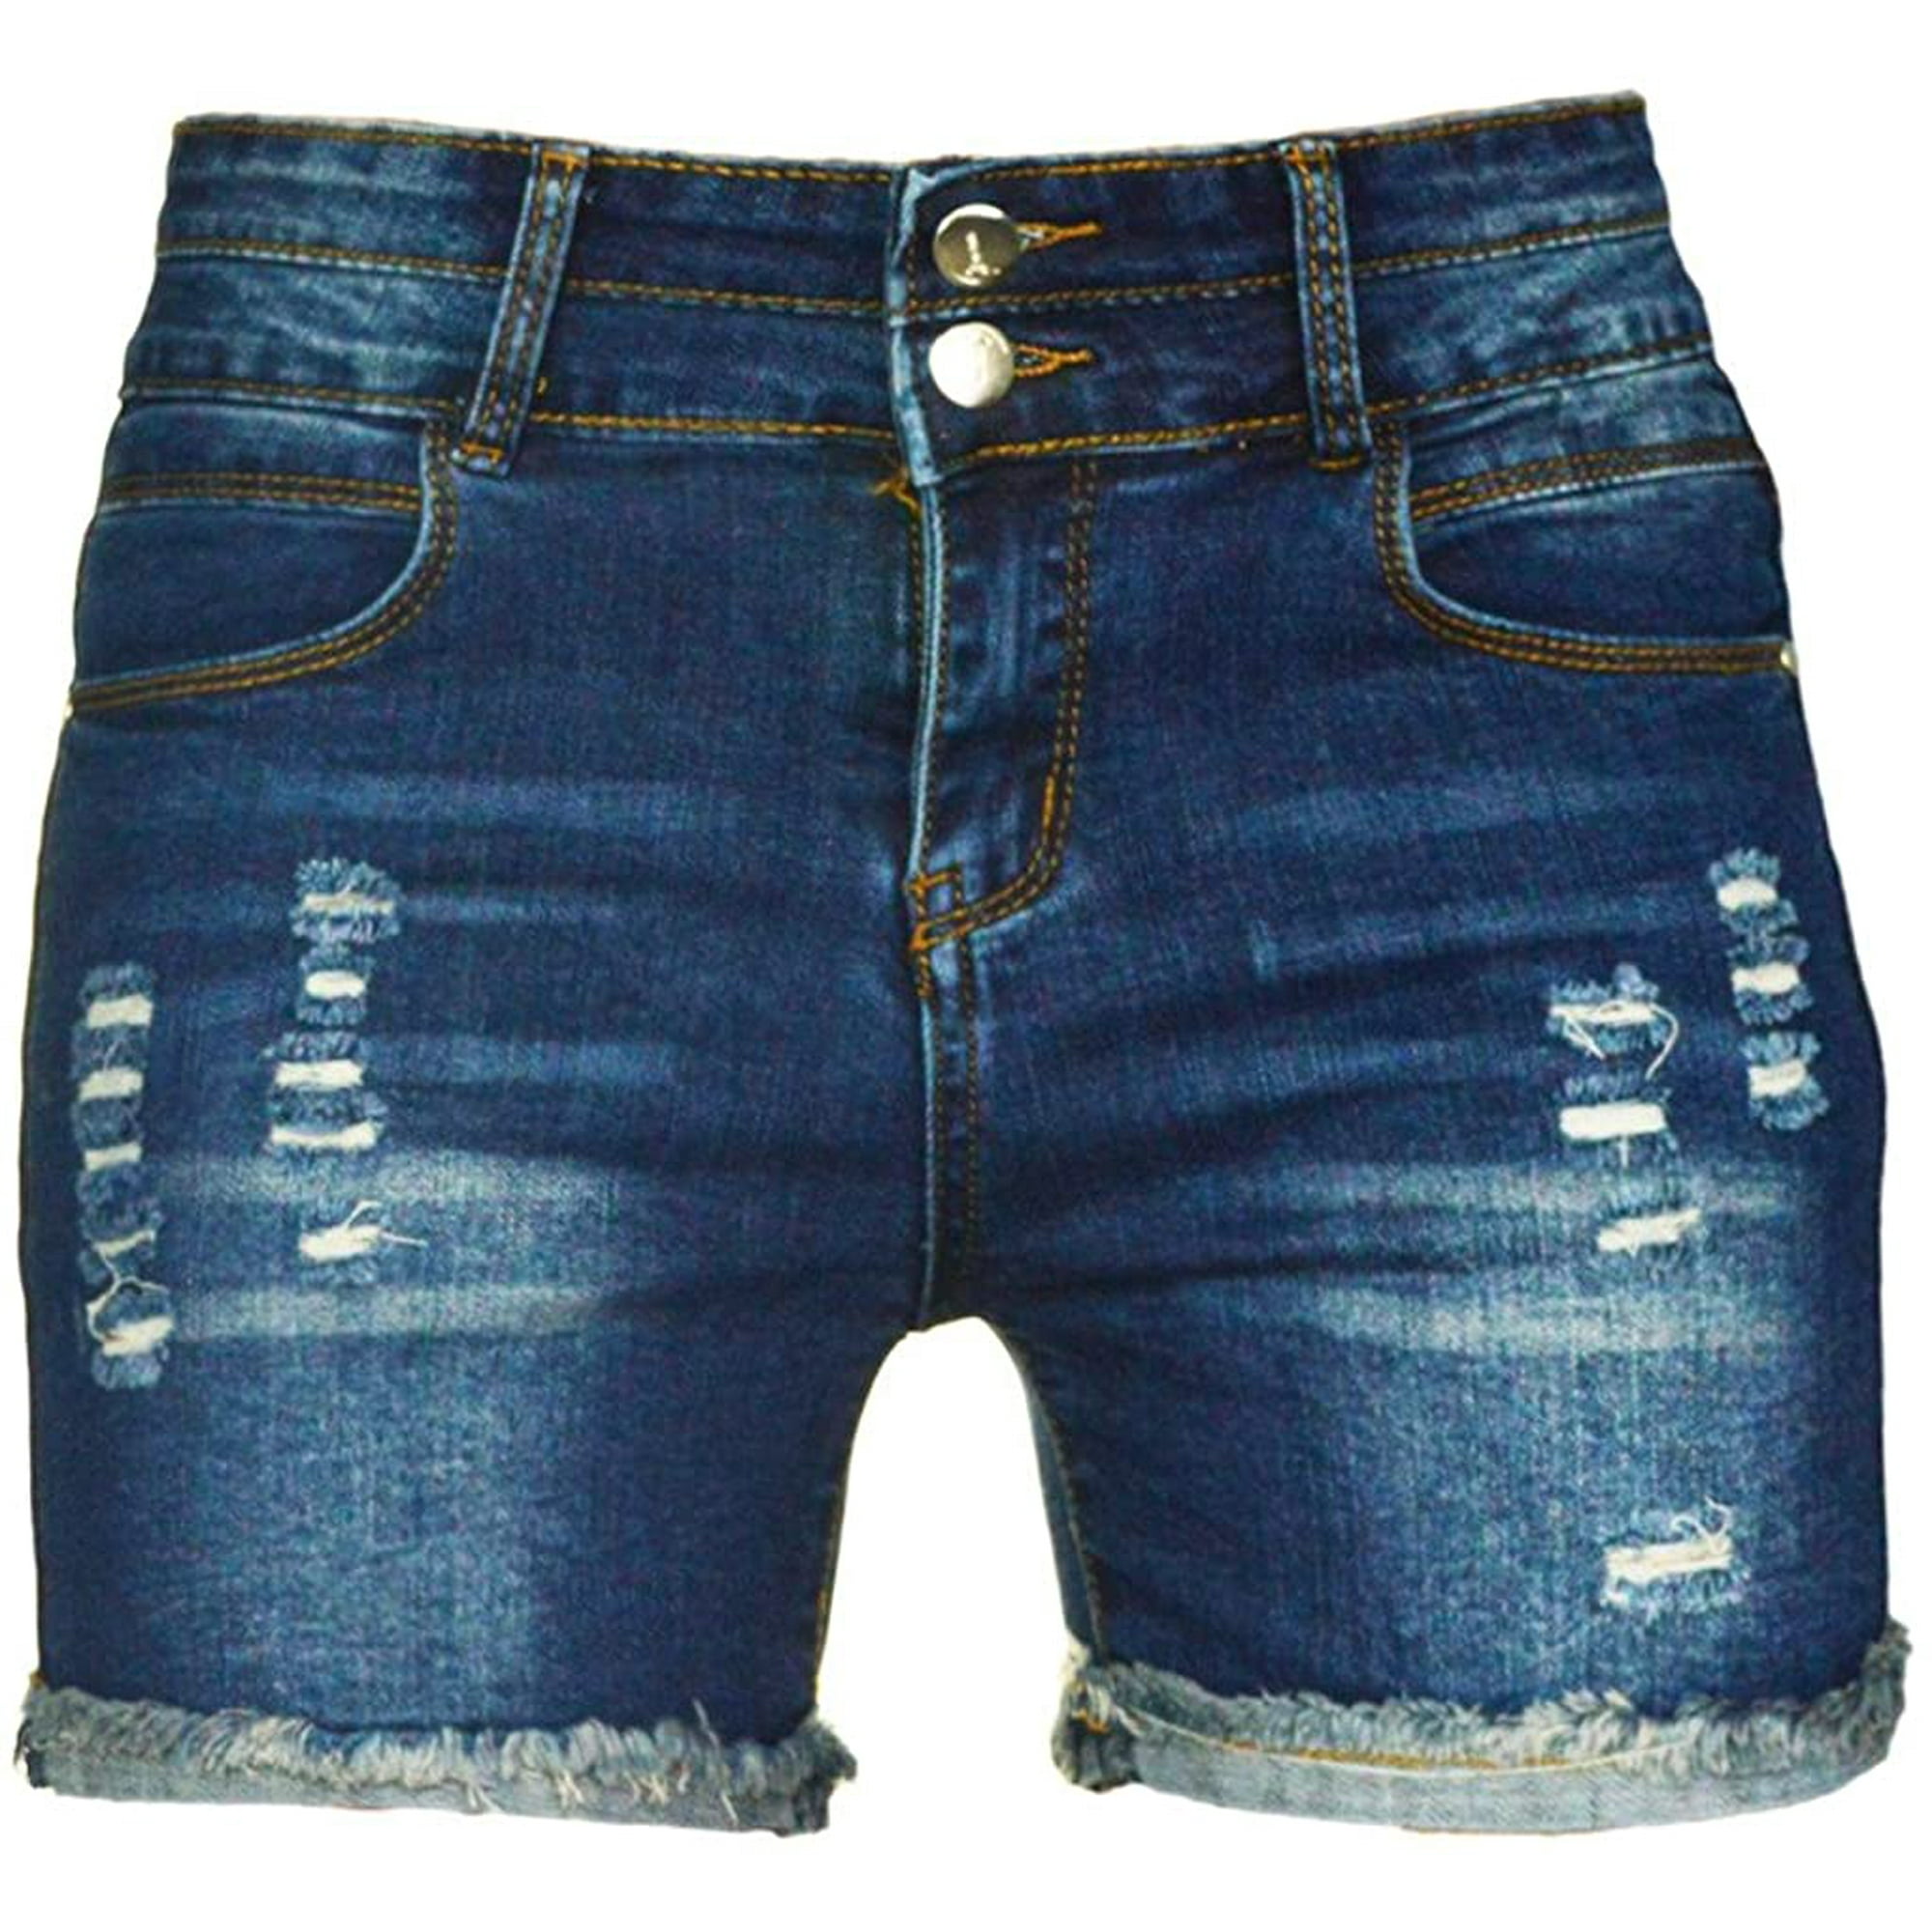 Women's Sexy Stretchy Fabric Hot Pants Distressed Denim Shorts, Size 2-16 |  Walmart Canada